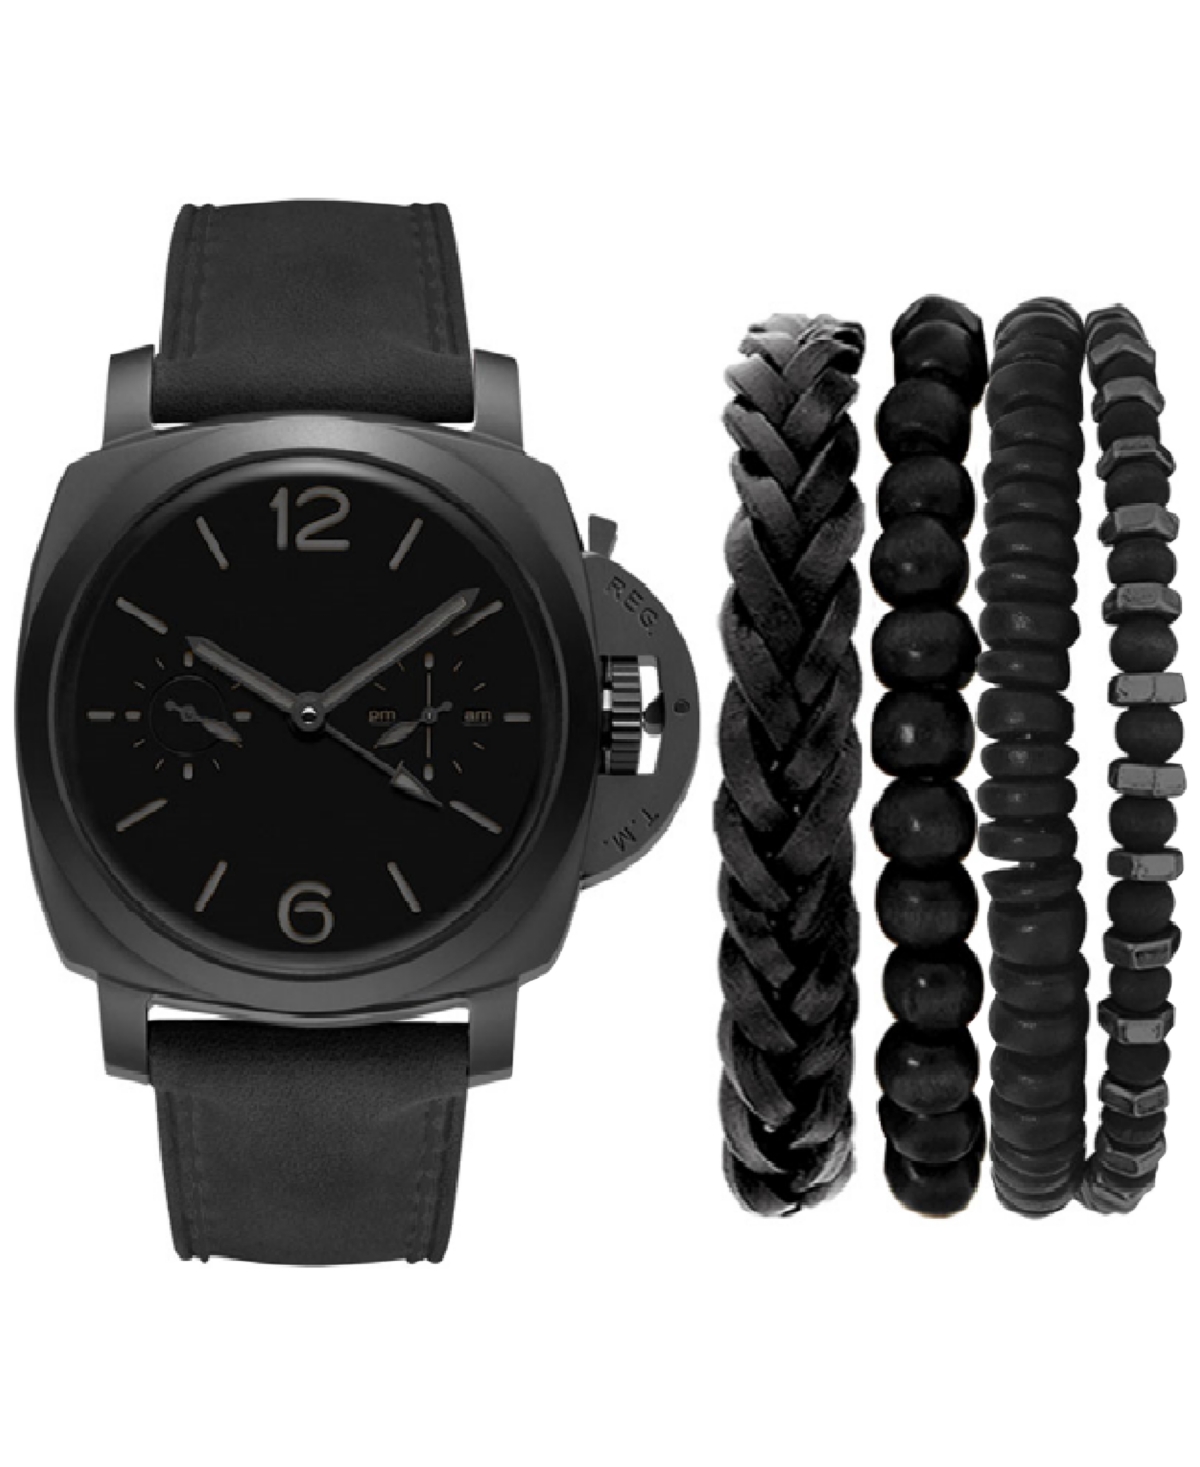 Men's Black Leather Strap Watch 44mm Gift Set - Black